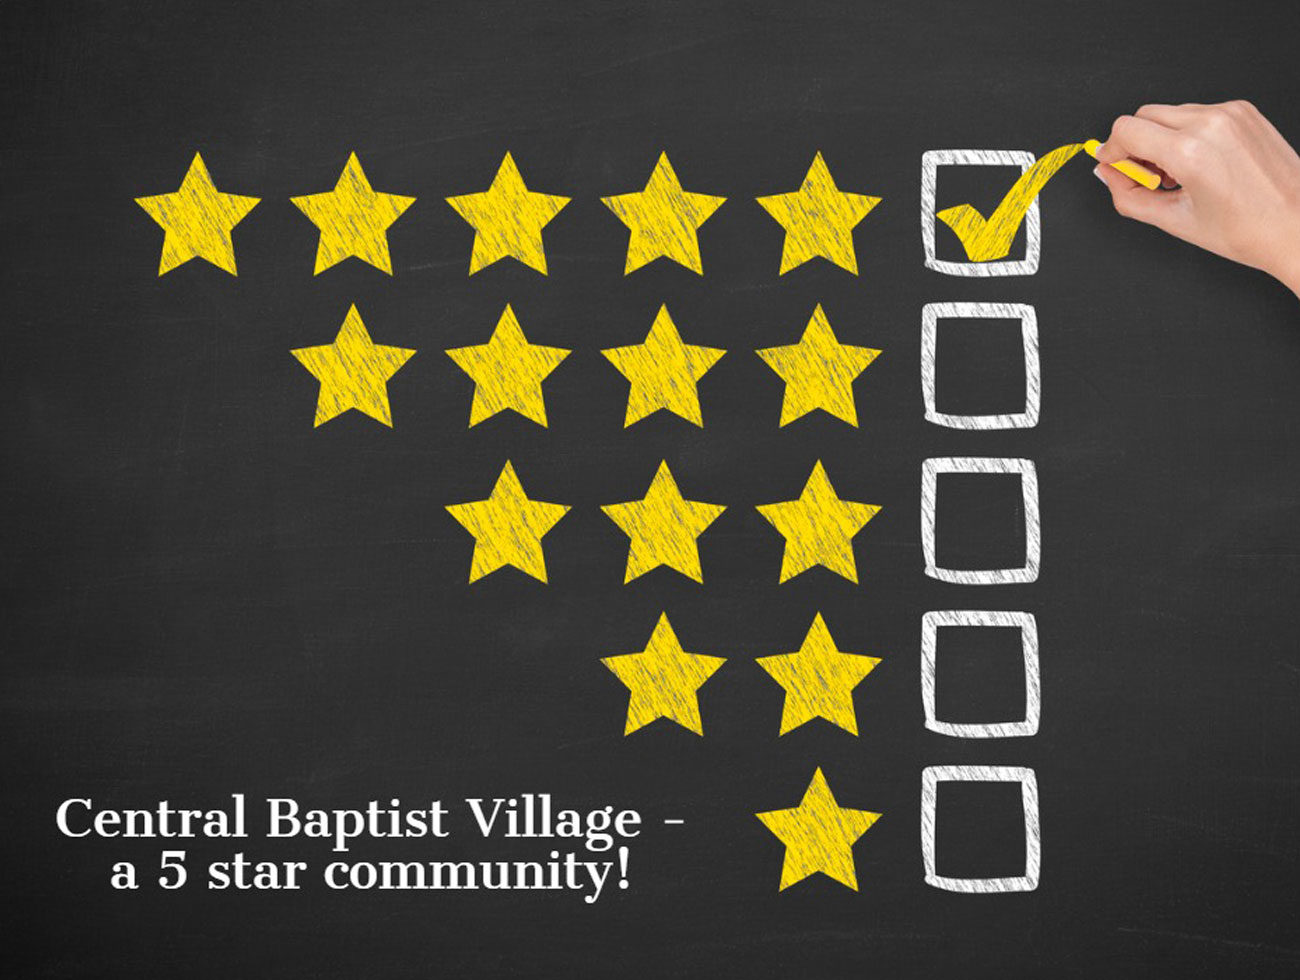 Central Baptist Village - a 5 star community